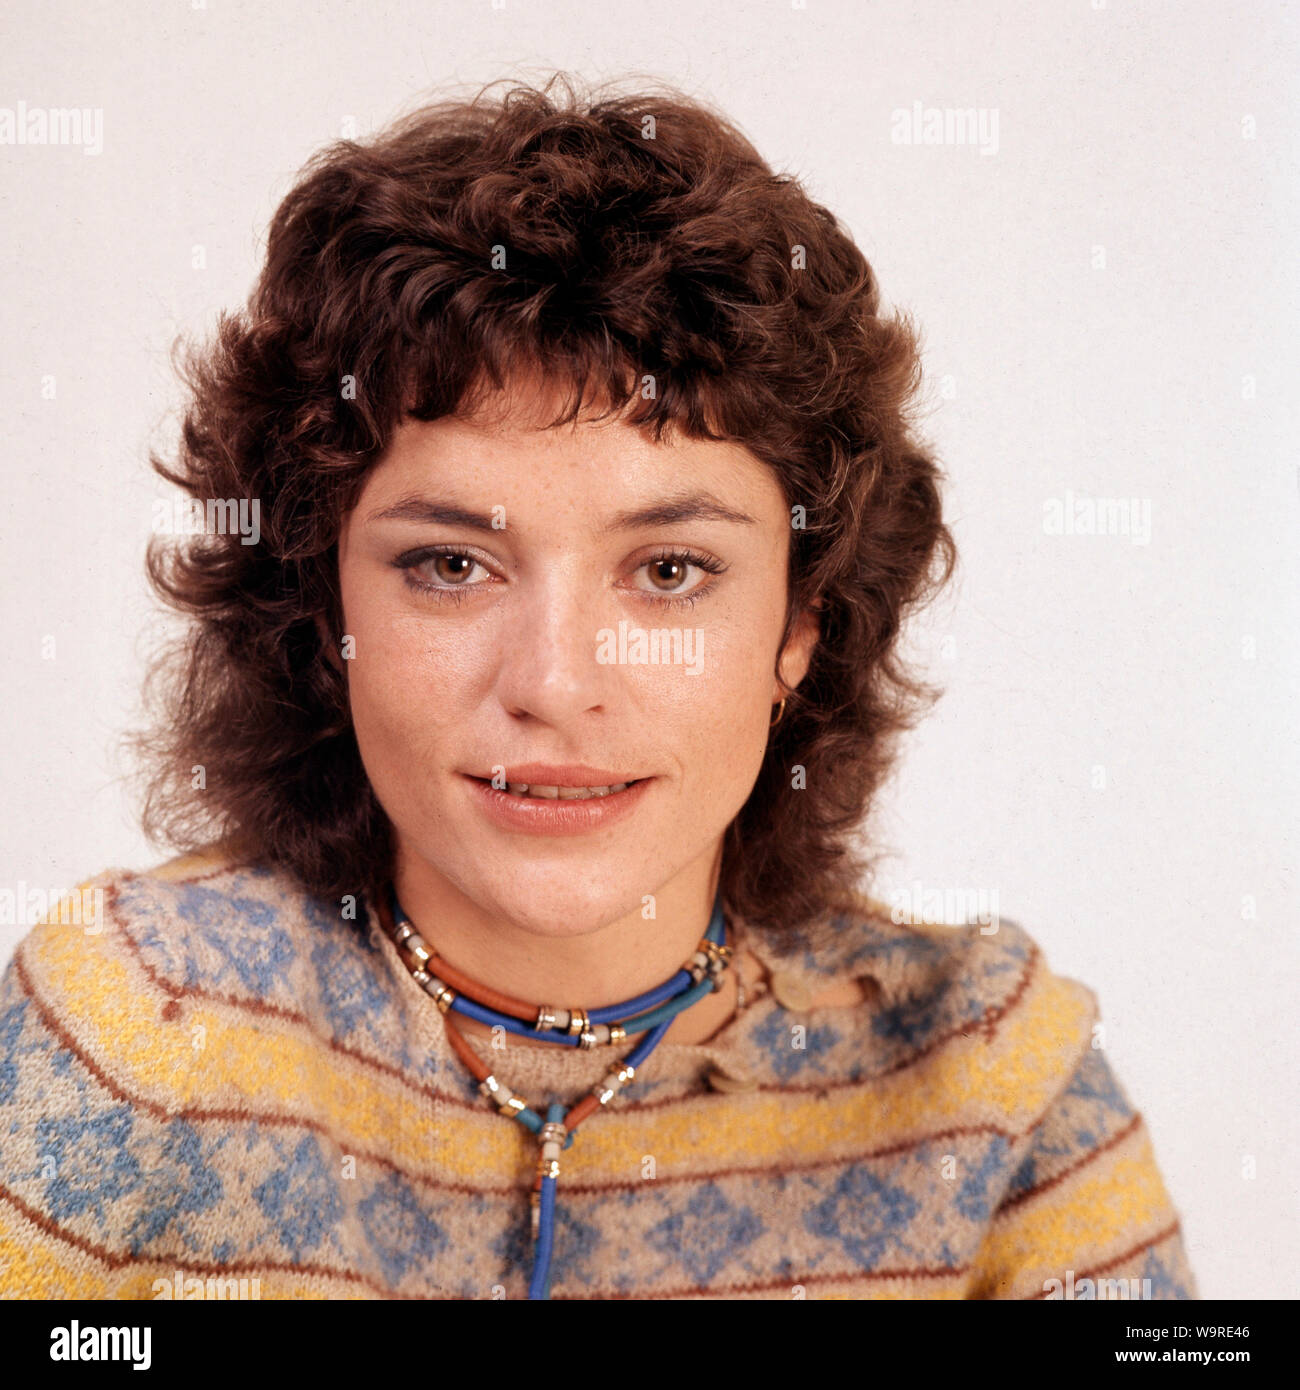 Actress diana quick hi-res stock photography and images - Alamy